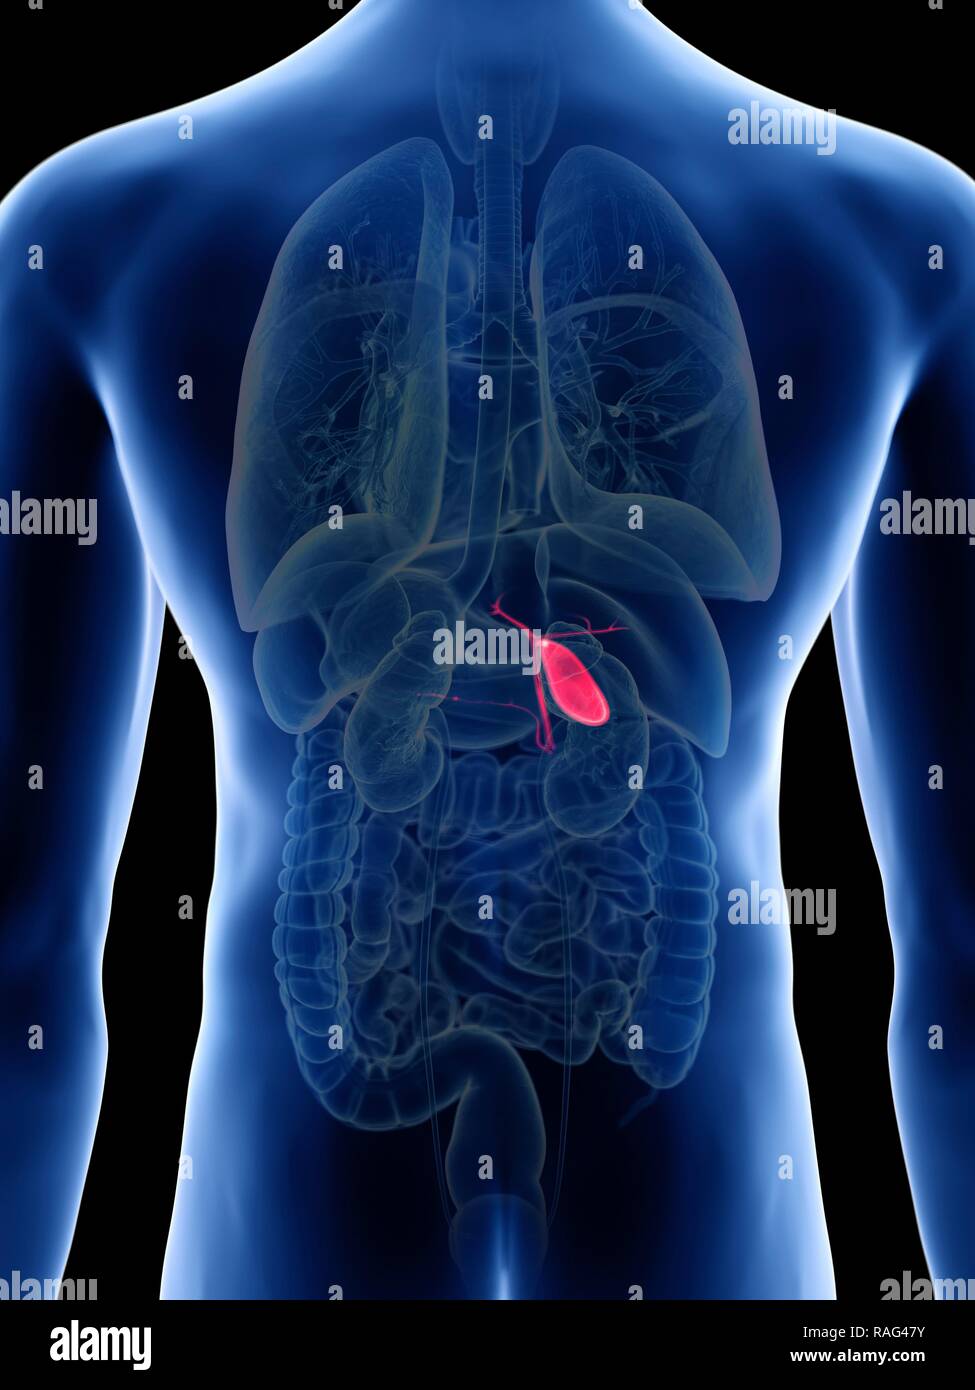 Illustration of a man's gallbladder Stock Photo - Alamy